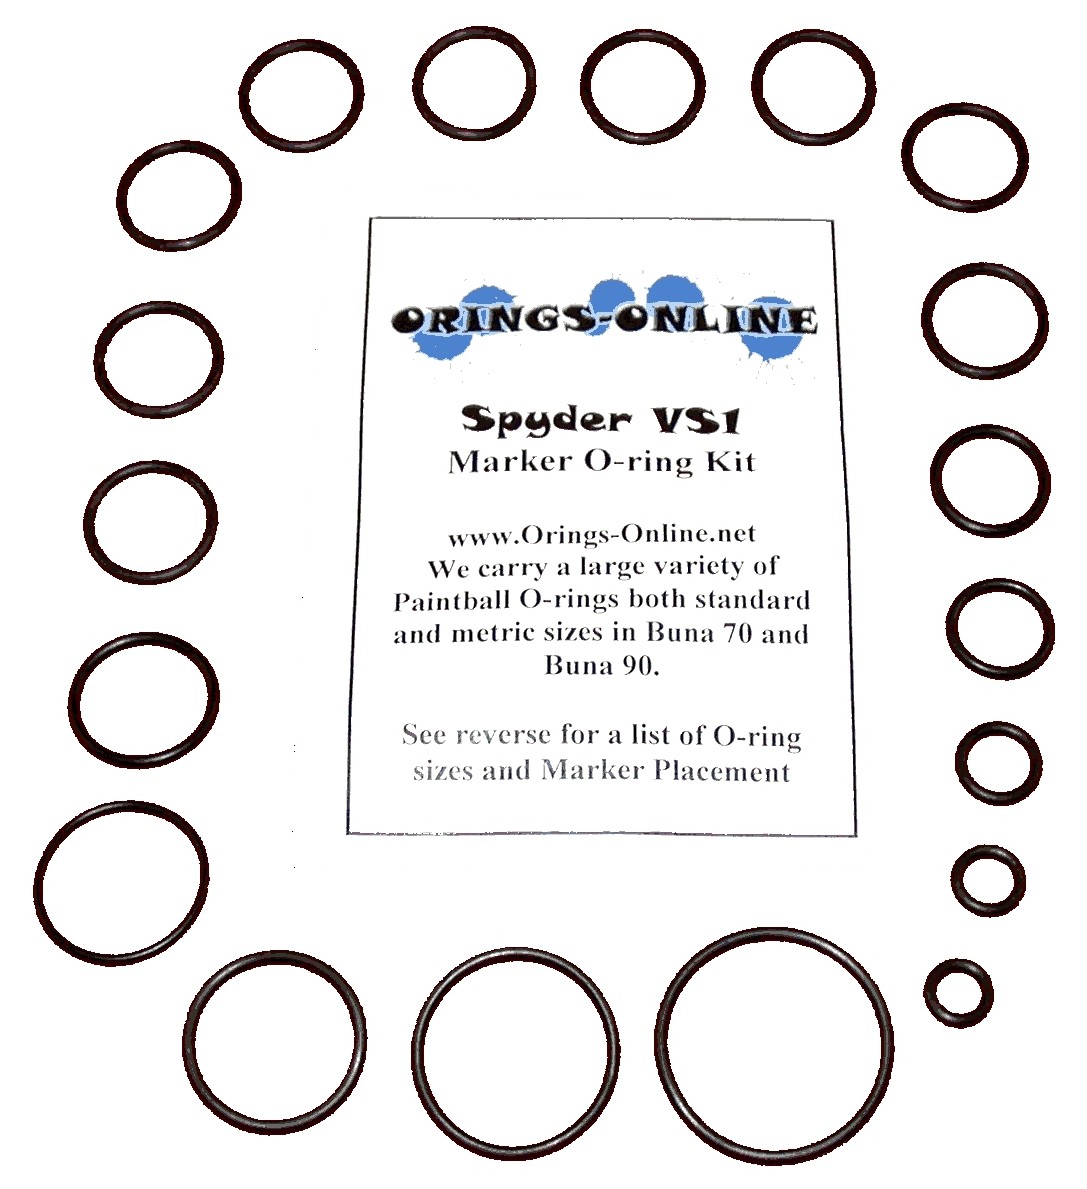 Spyder VS1 Marker O-ring Kit